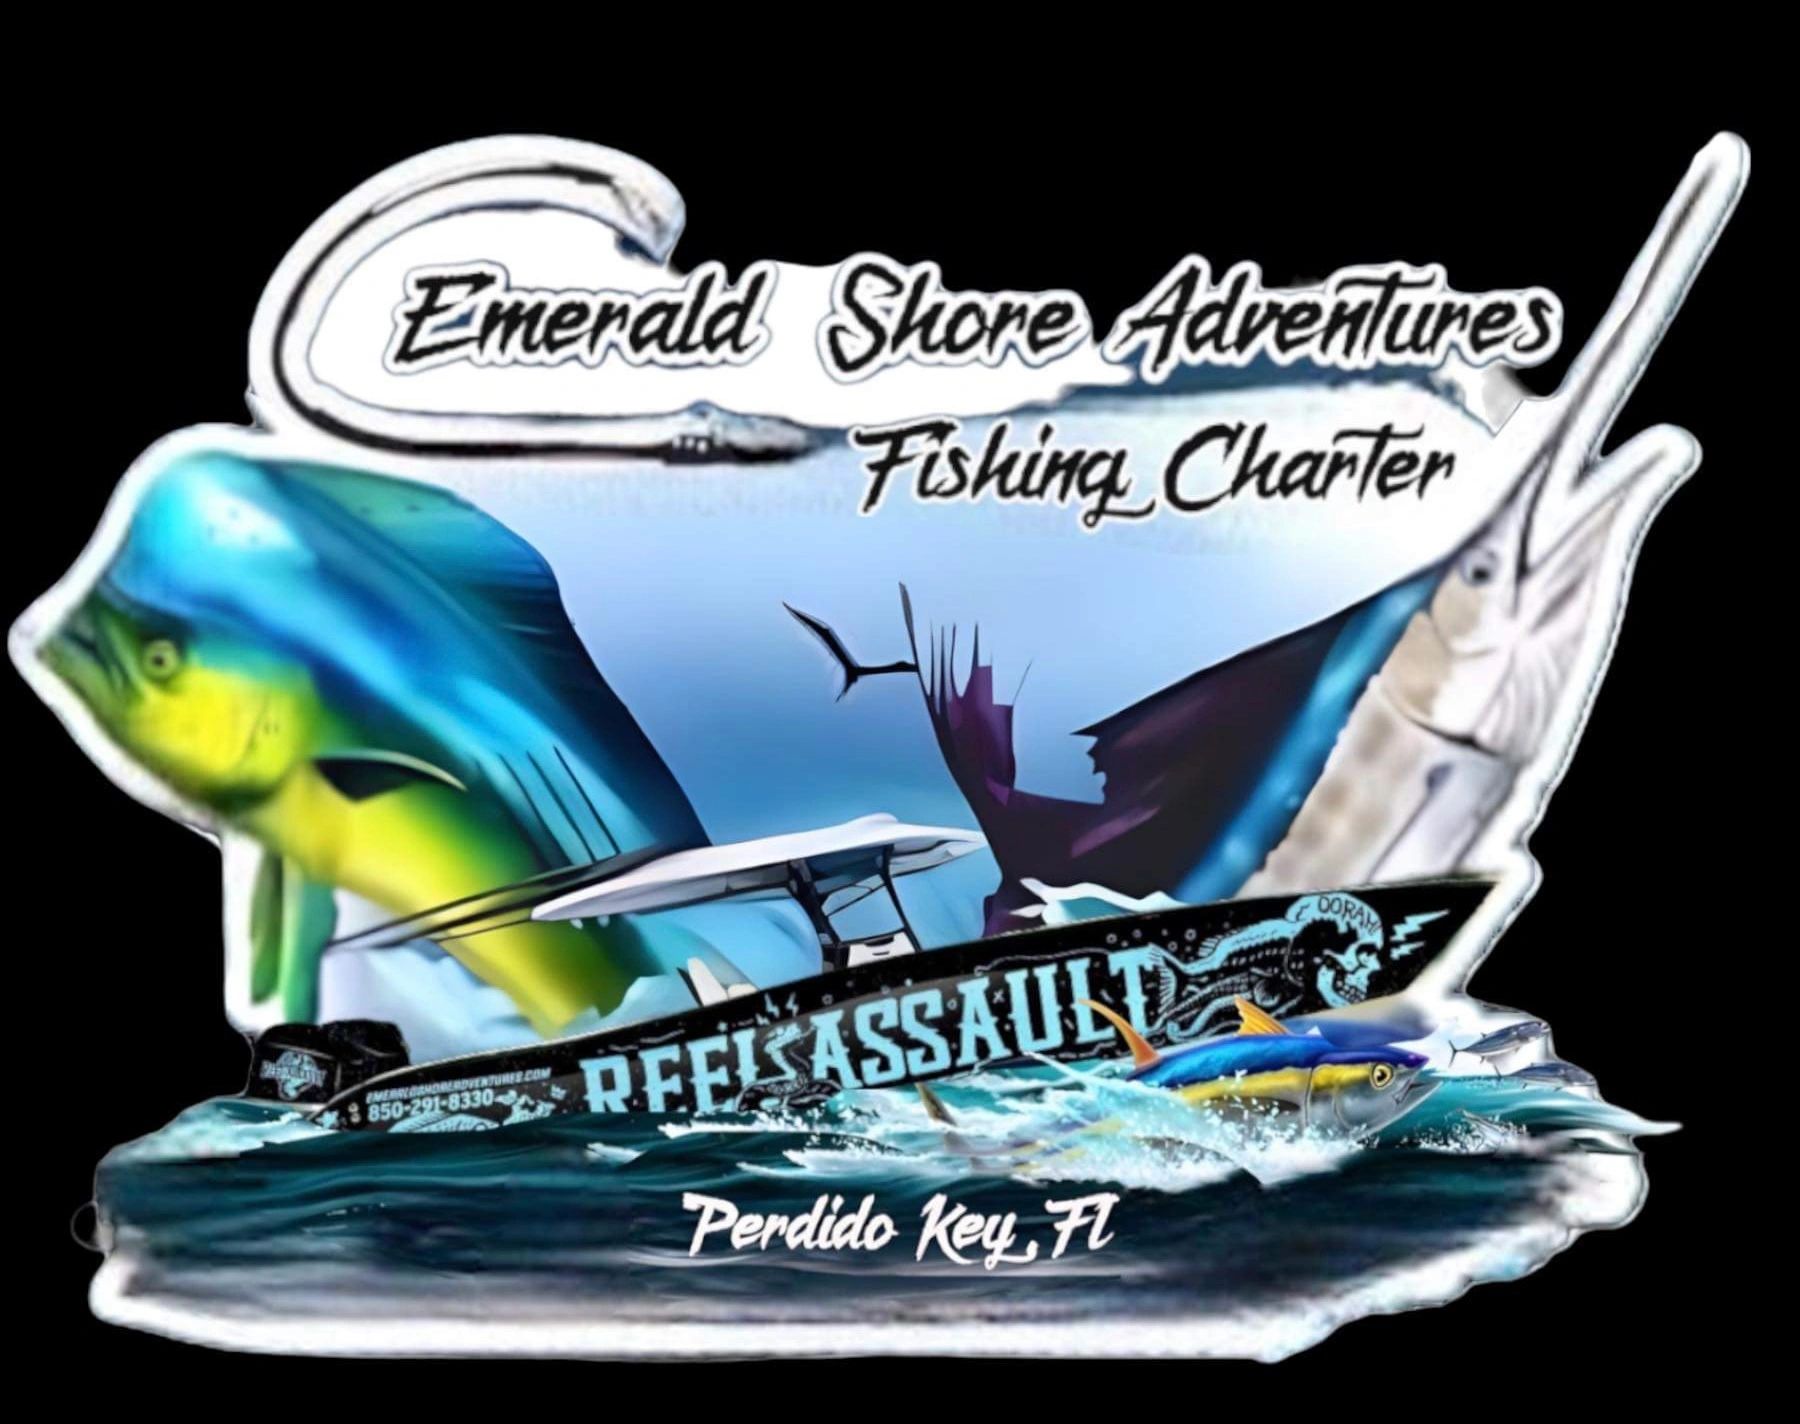 Reel Assault Fishing Shirts